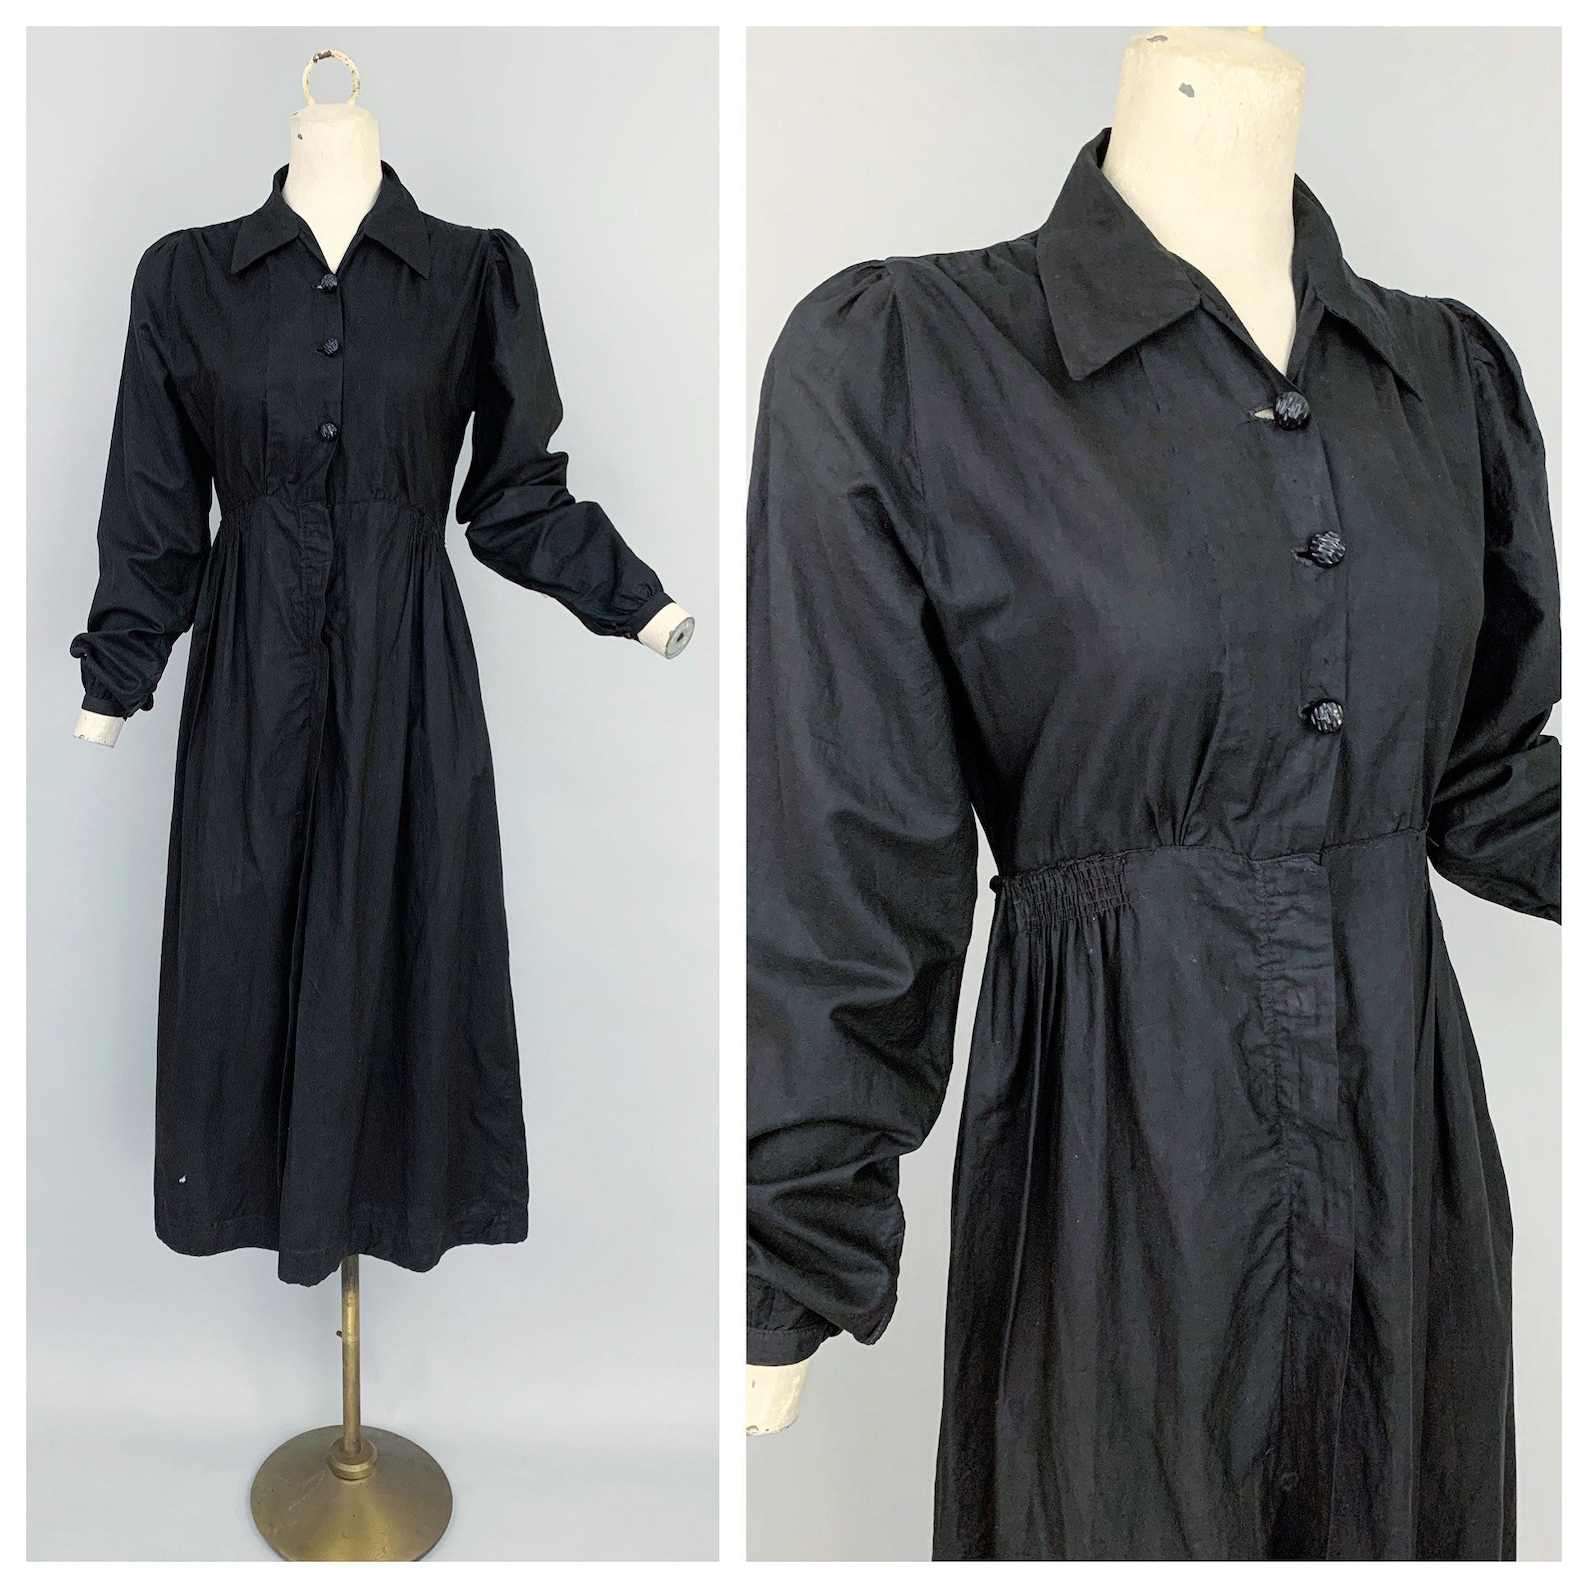 Antique Edwardian Maids Dress 1900s 1910s Black Cotton Work - Etsy